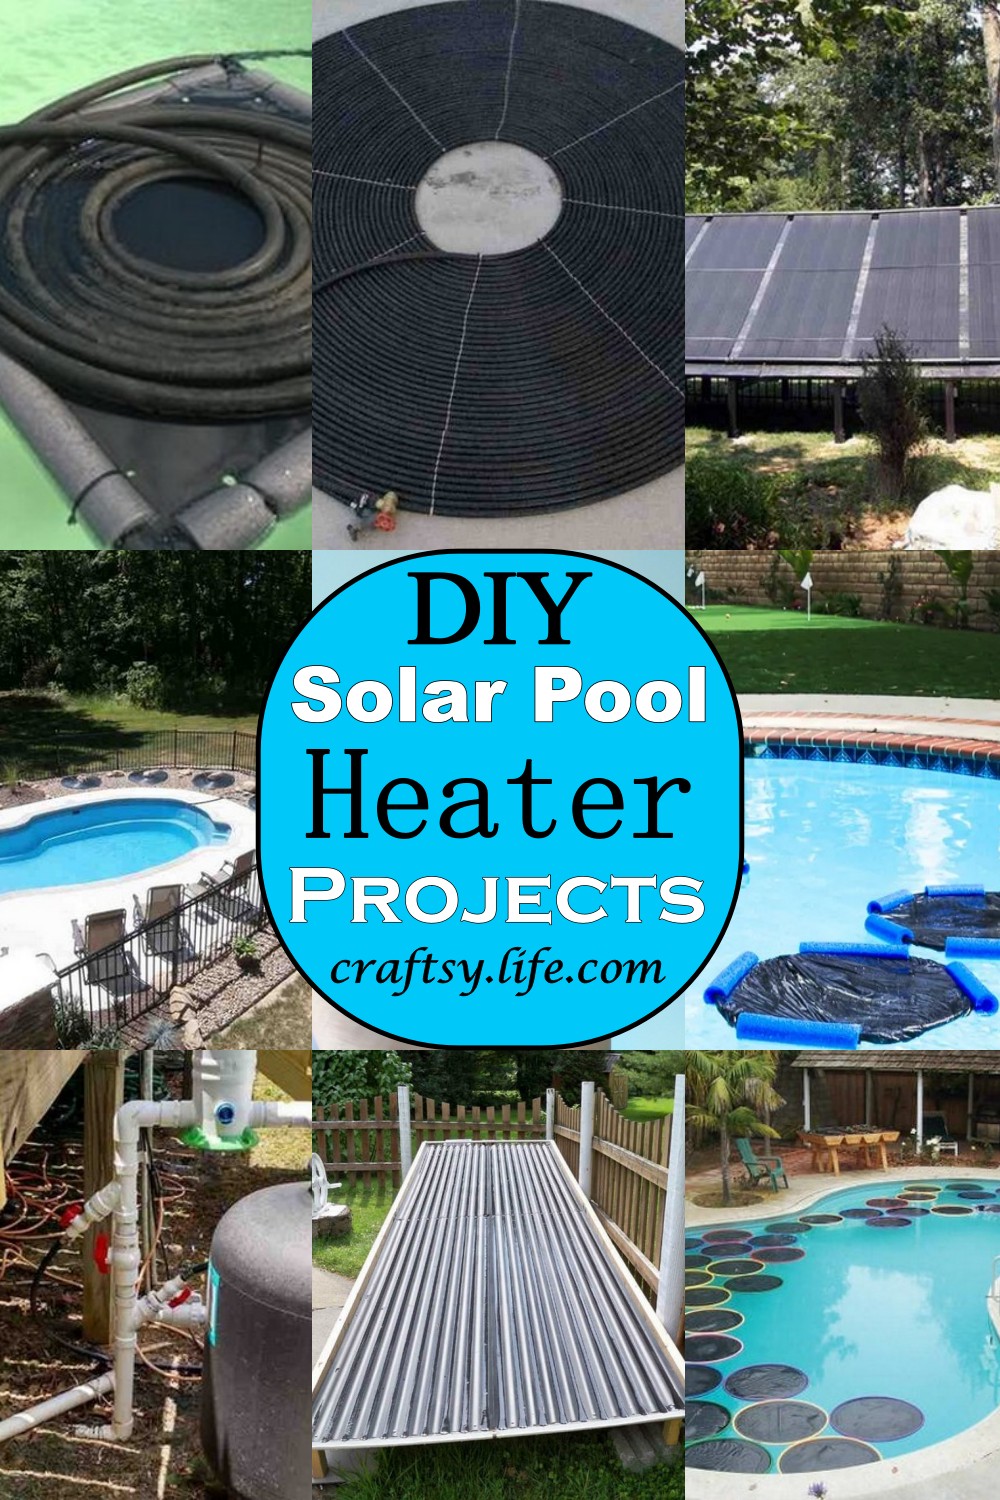 Convenient DIY Solar Pool Heater Projects